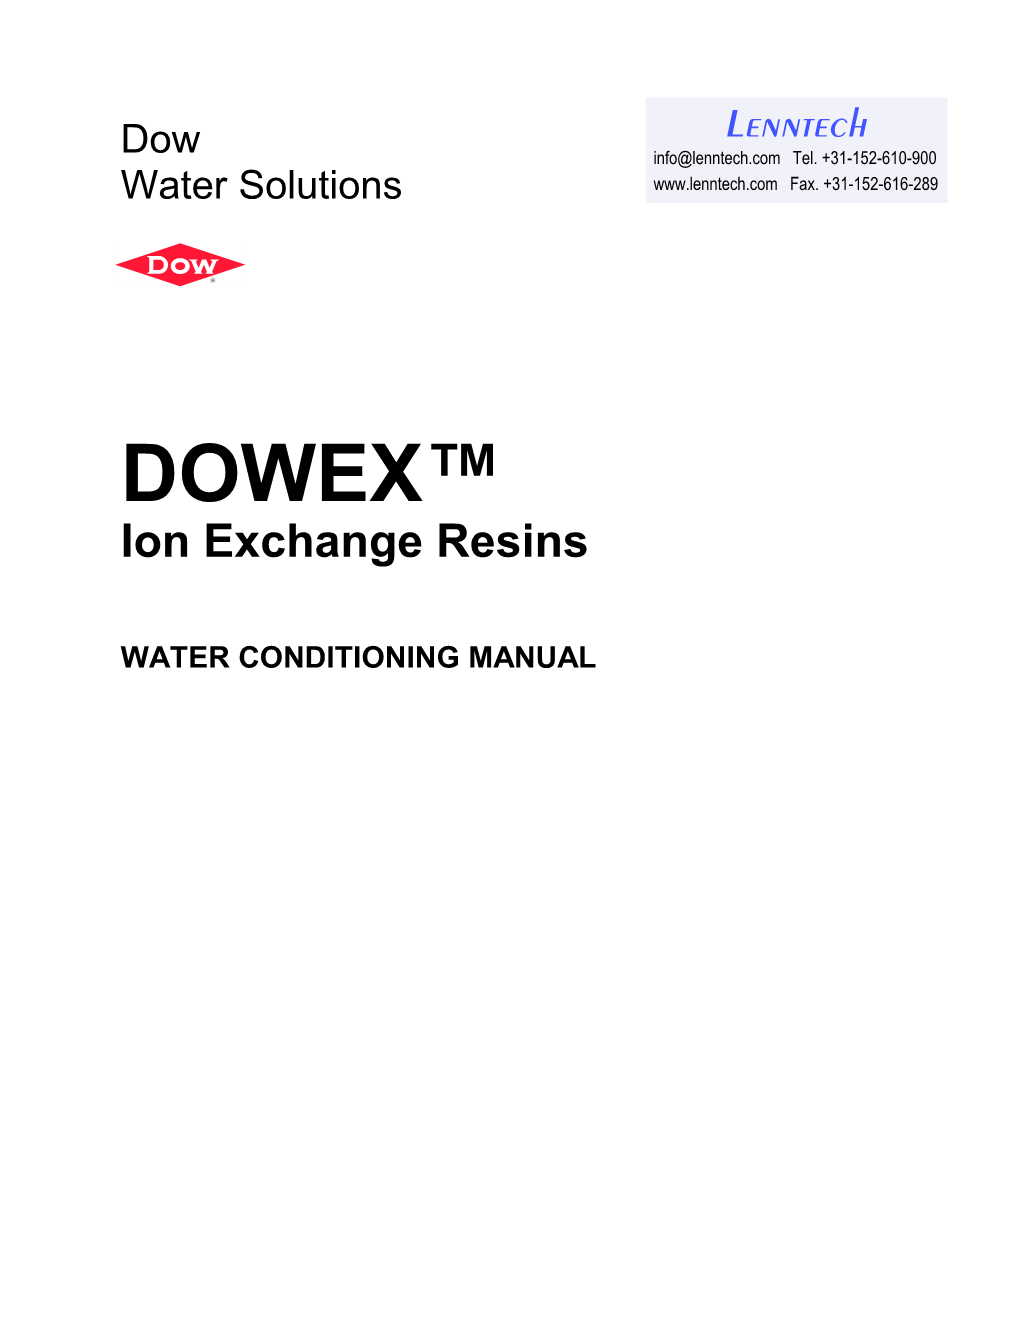 Dowex-Ion-Exchange-Resins-Water